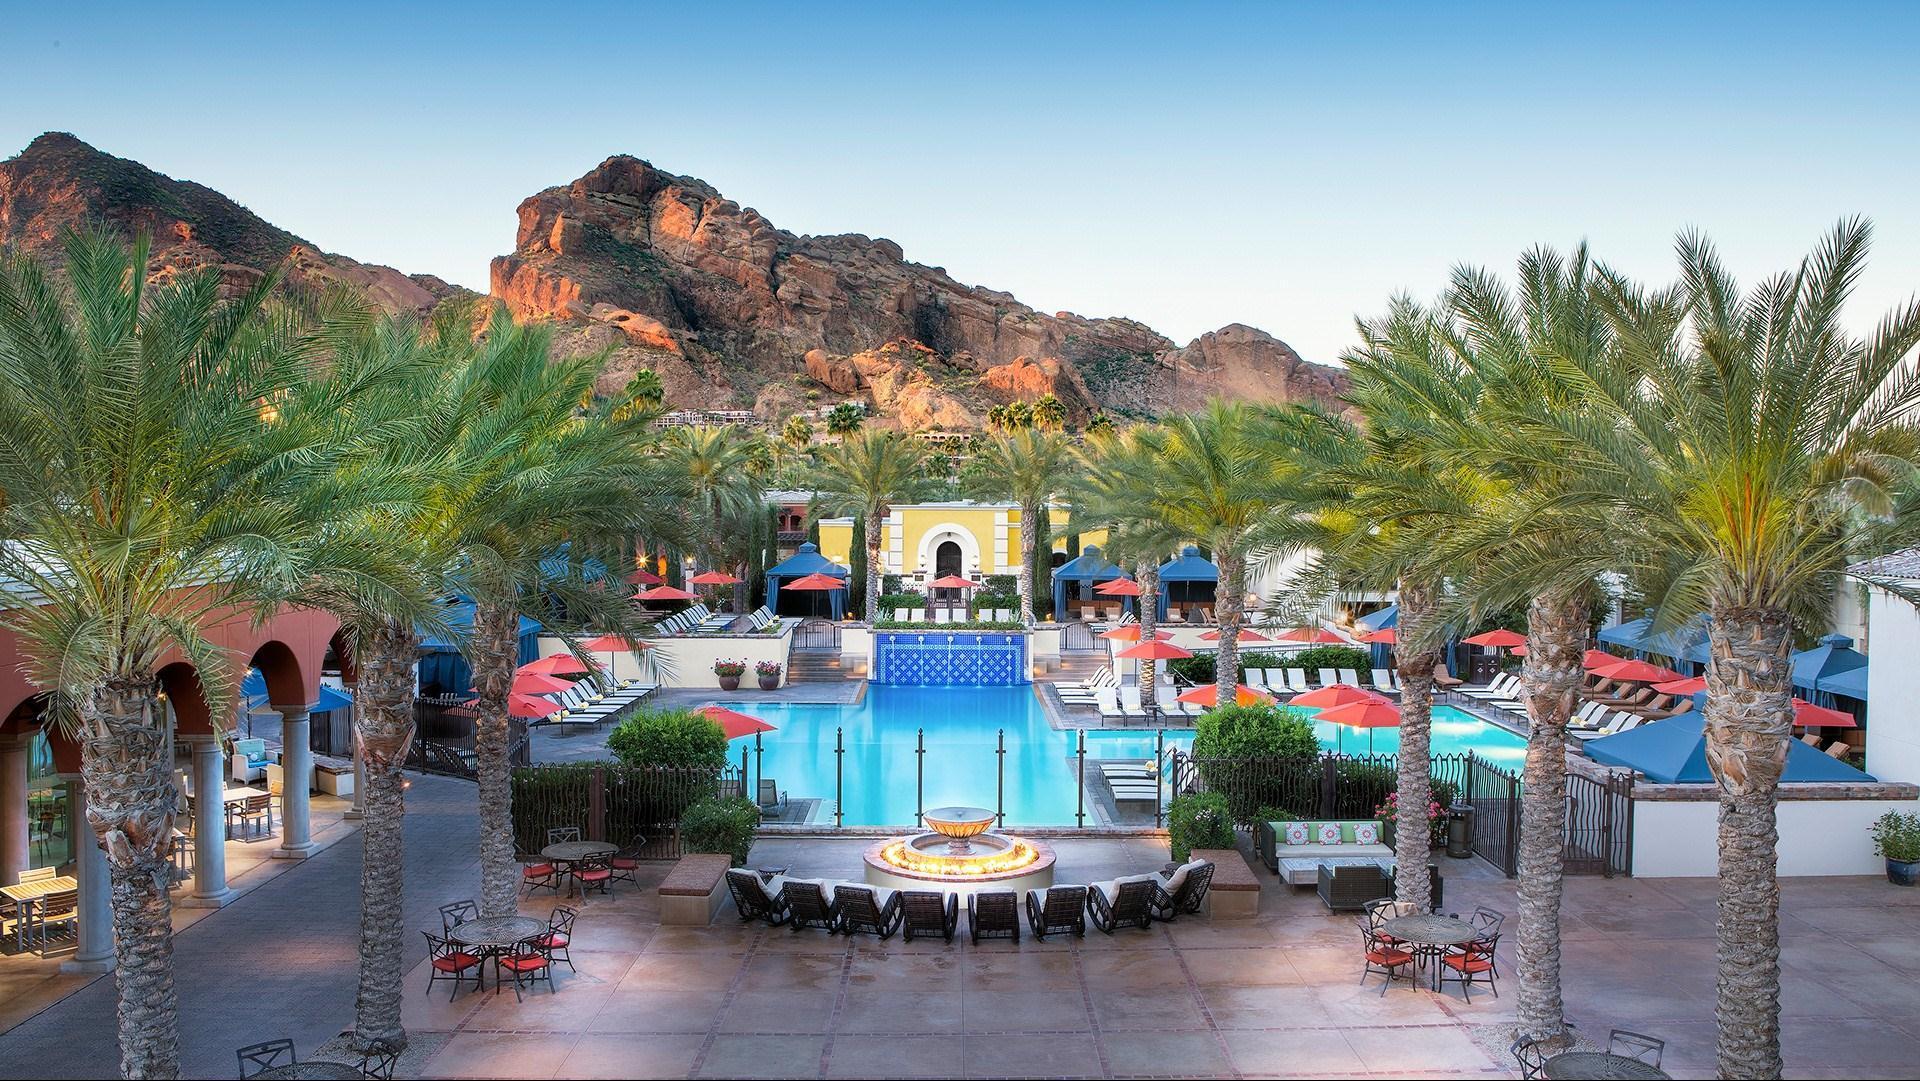 Omni Scottsdale Resort & Spa at Montelucia in Scottsdale, AZ